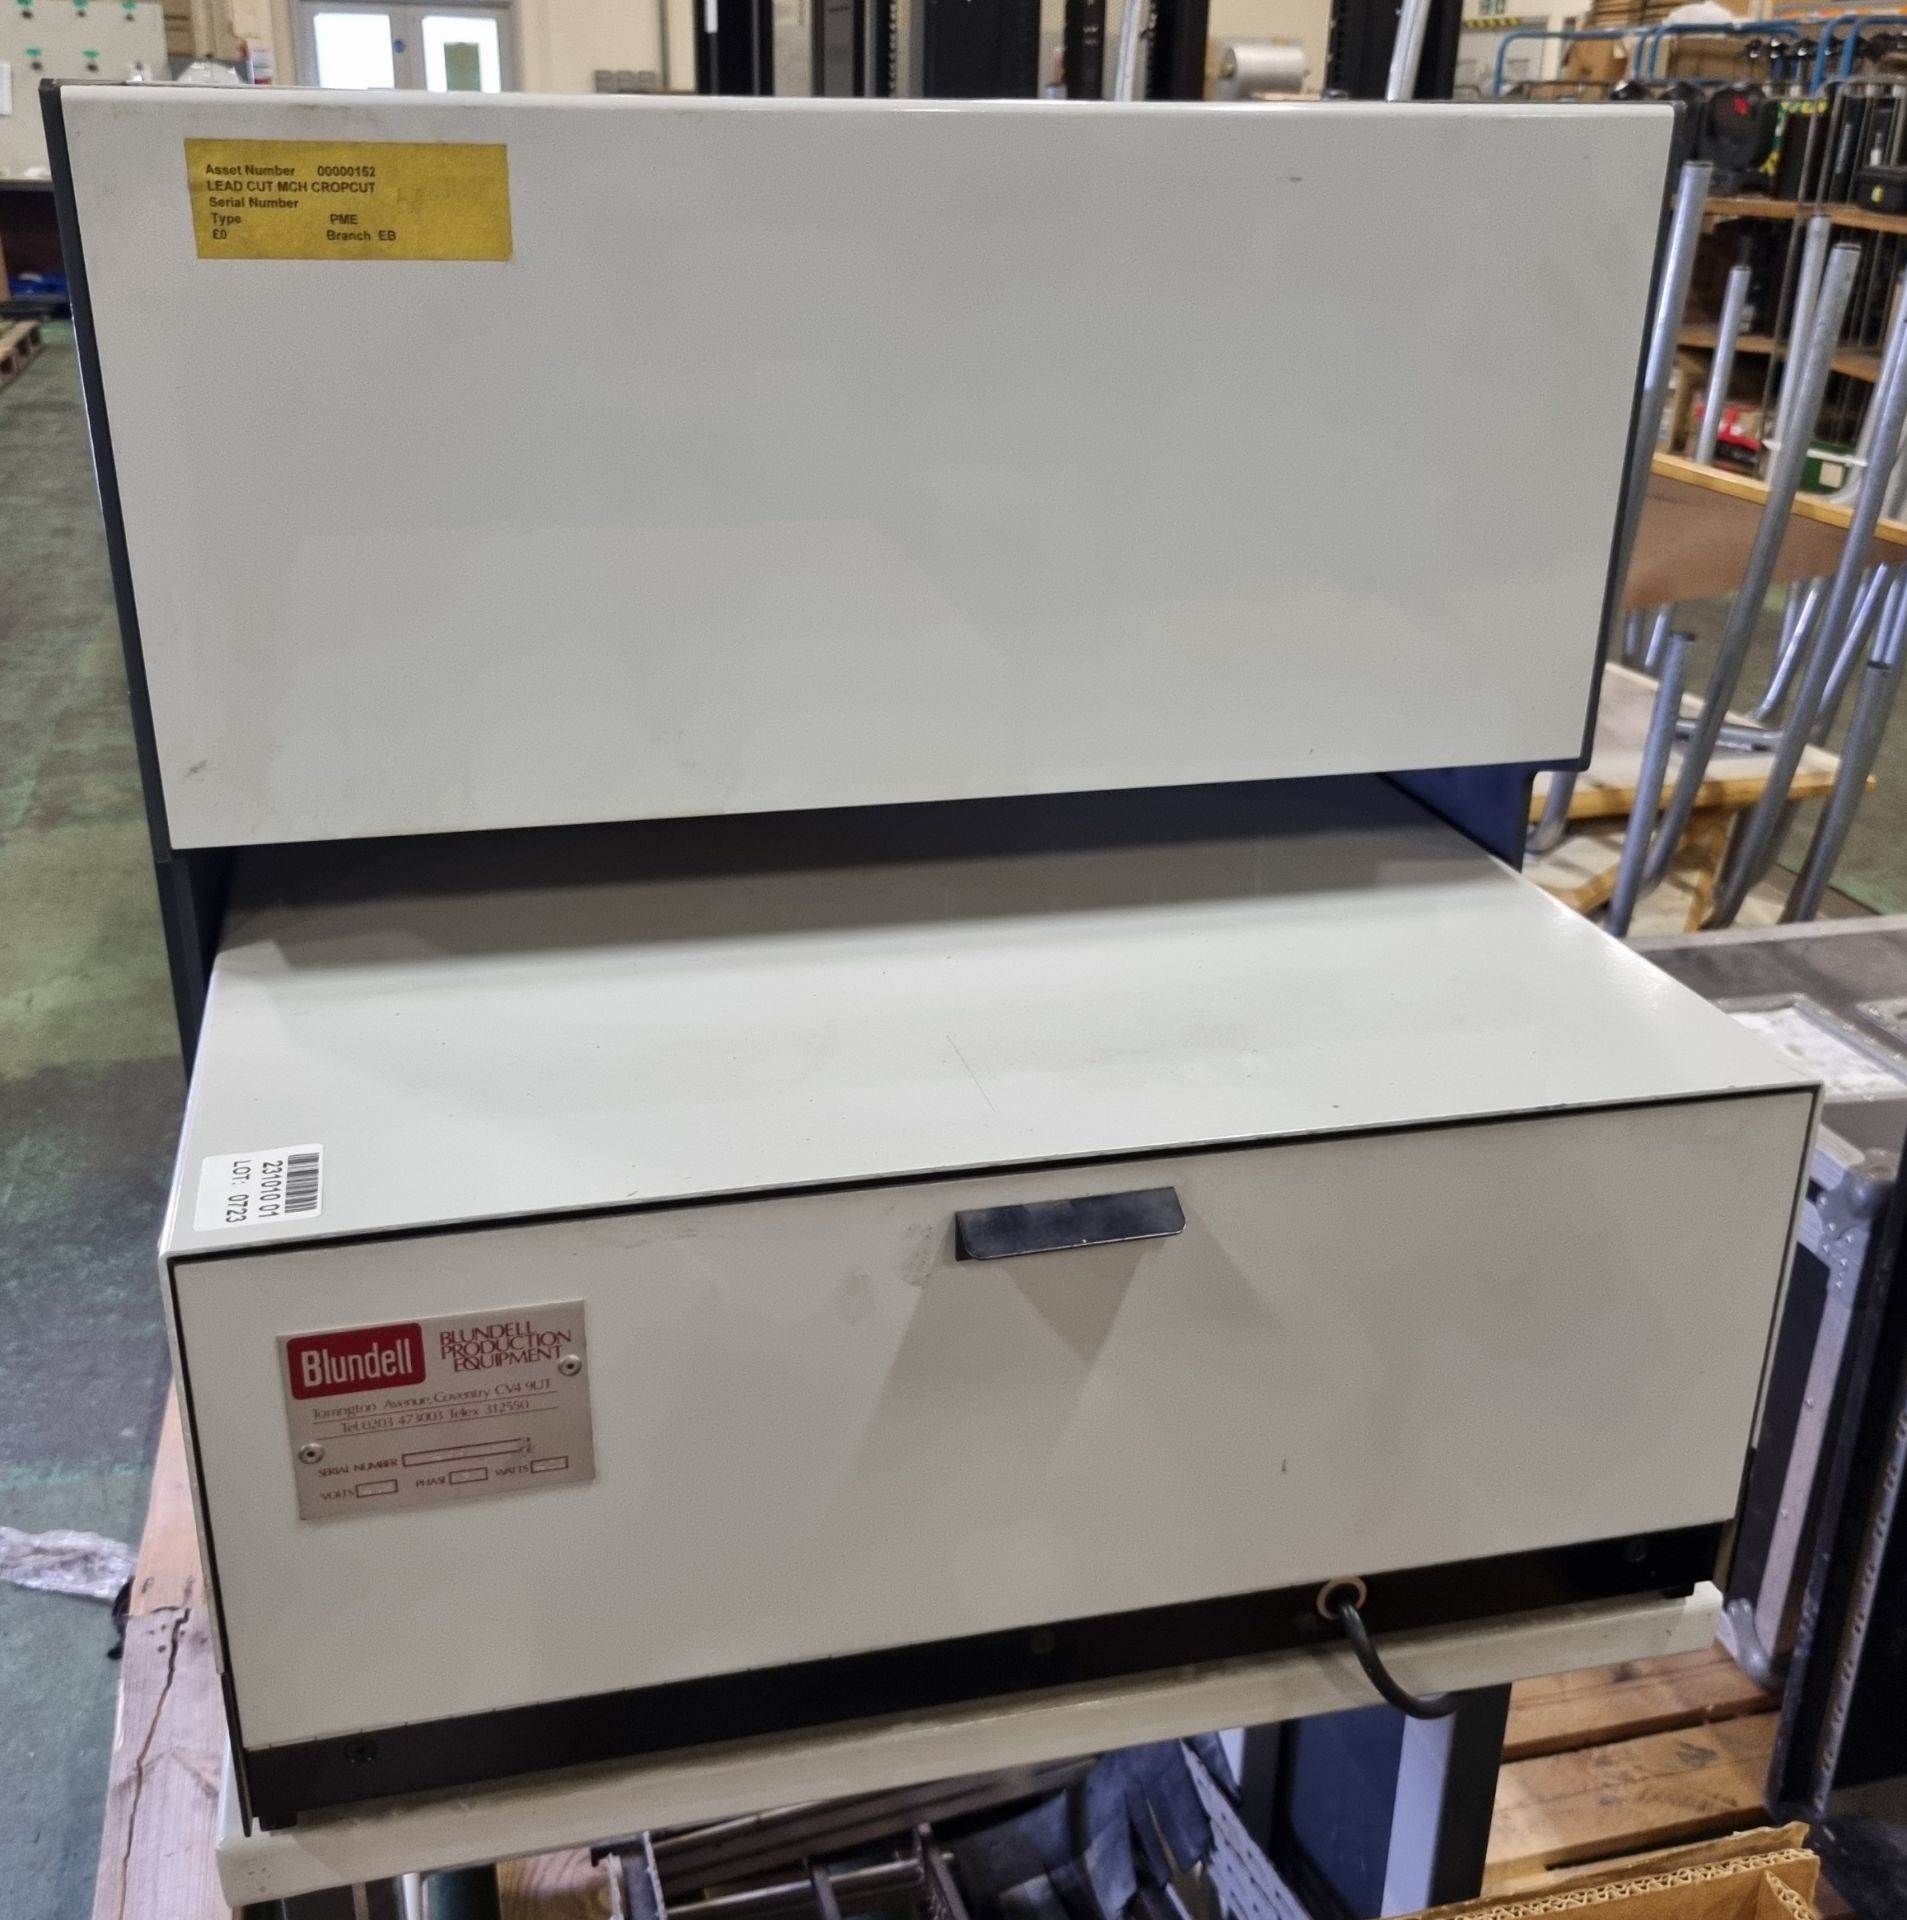 Blundell Production Equipment Cropmatic lead cutting machine - Serial No. 455 - 3 phase 415V 400W - Bild 3 aus 5